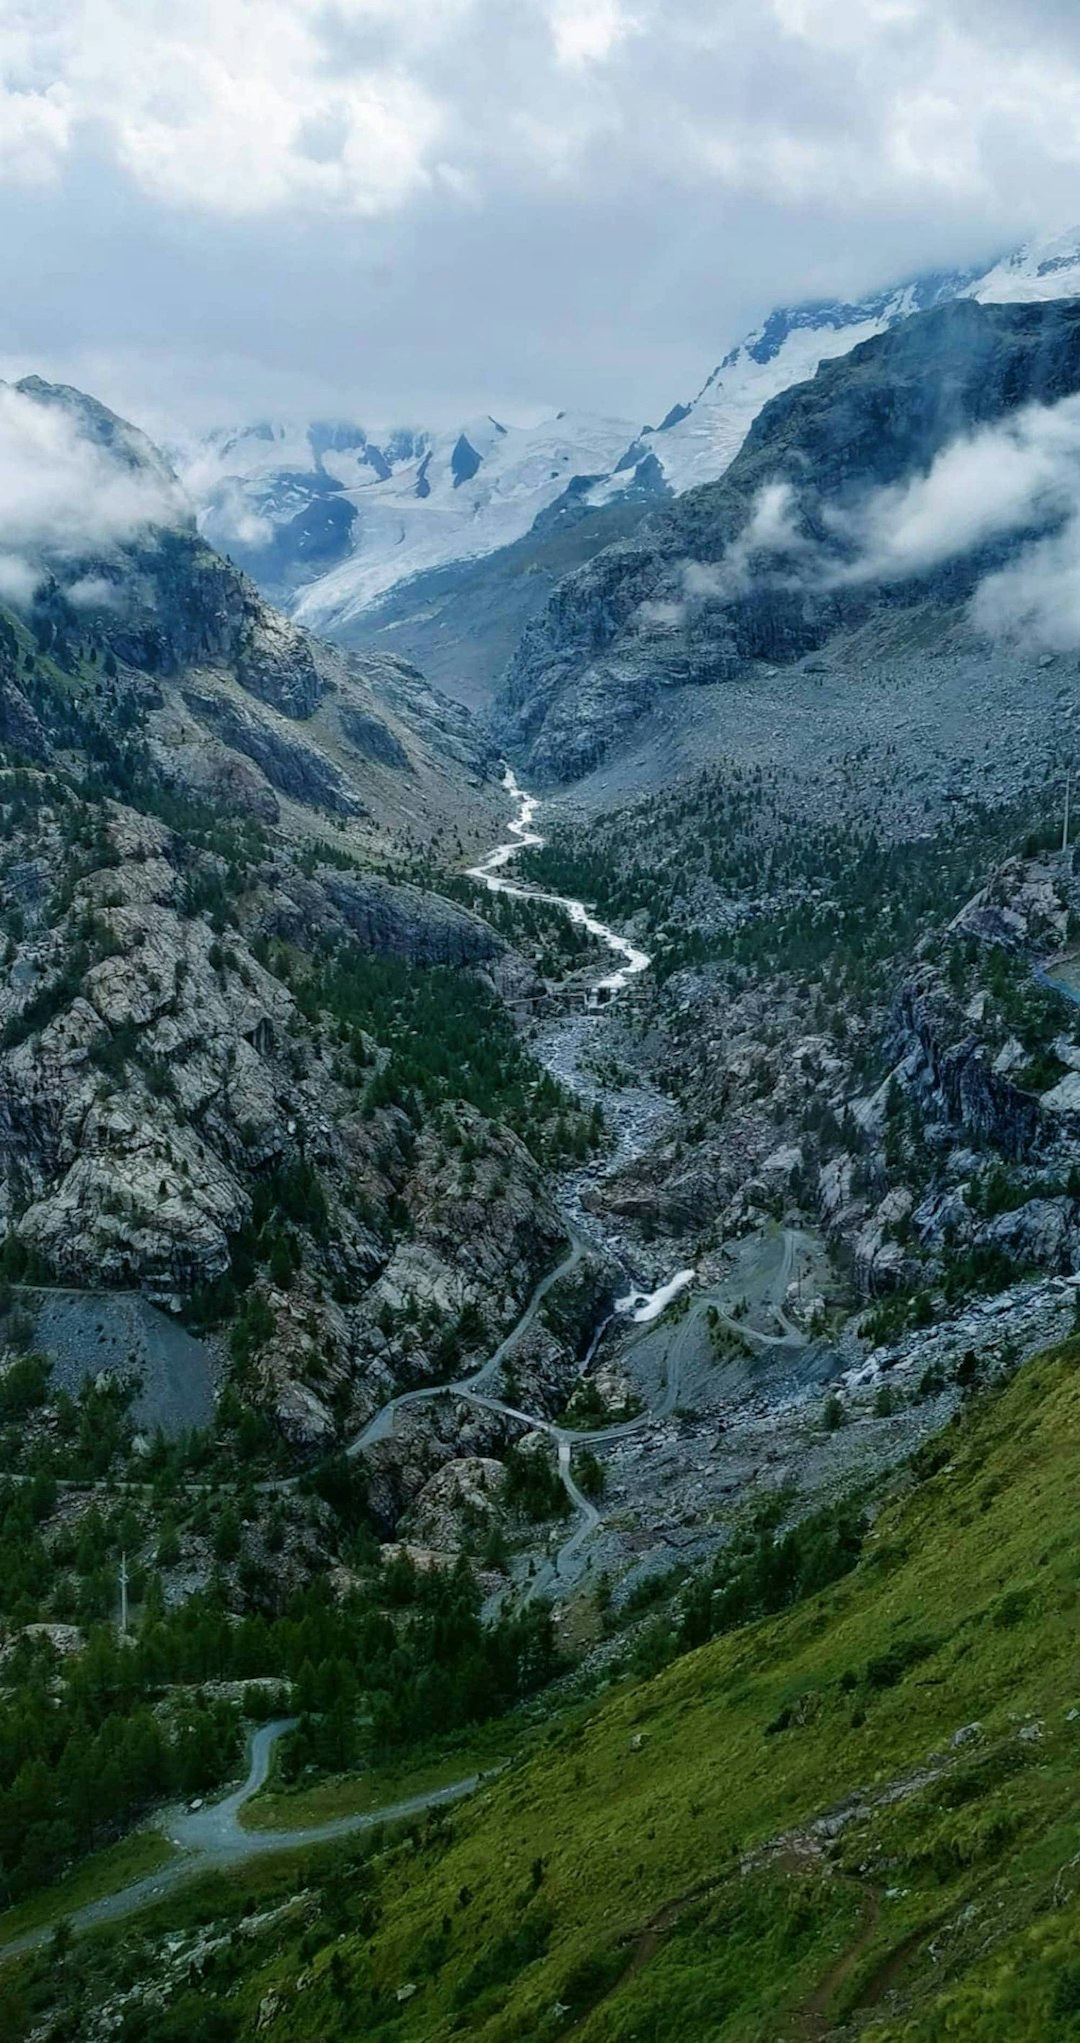 Travel Tips and Stories of Matterhorn in Switzerland